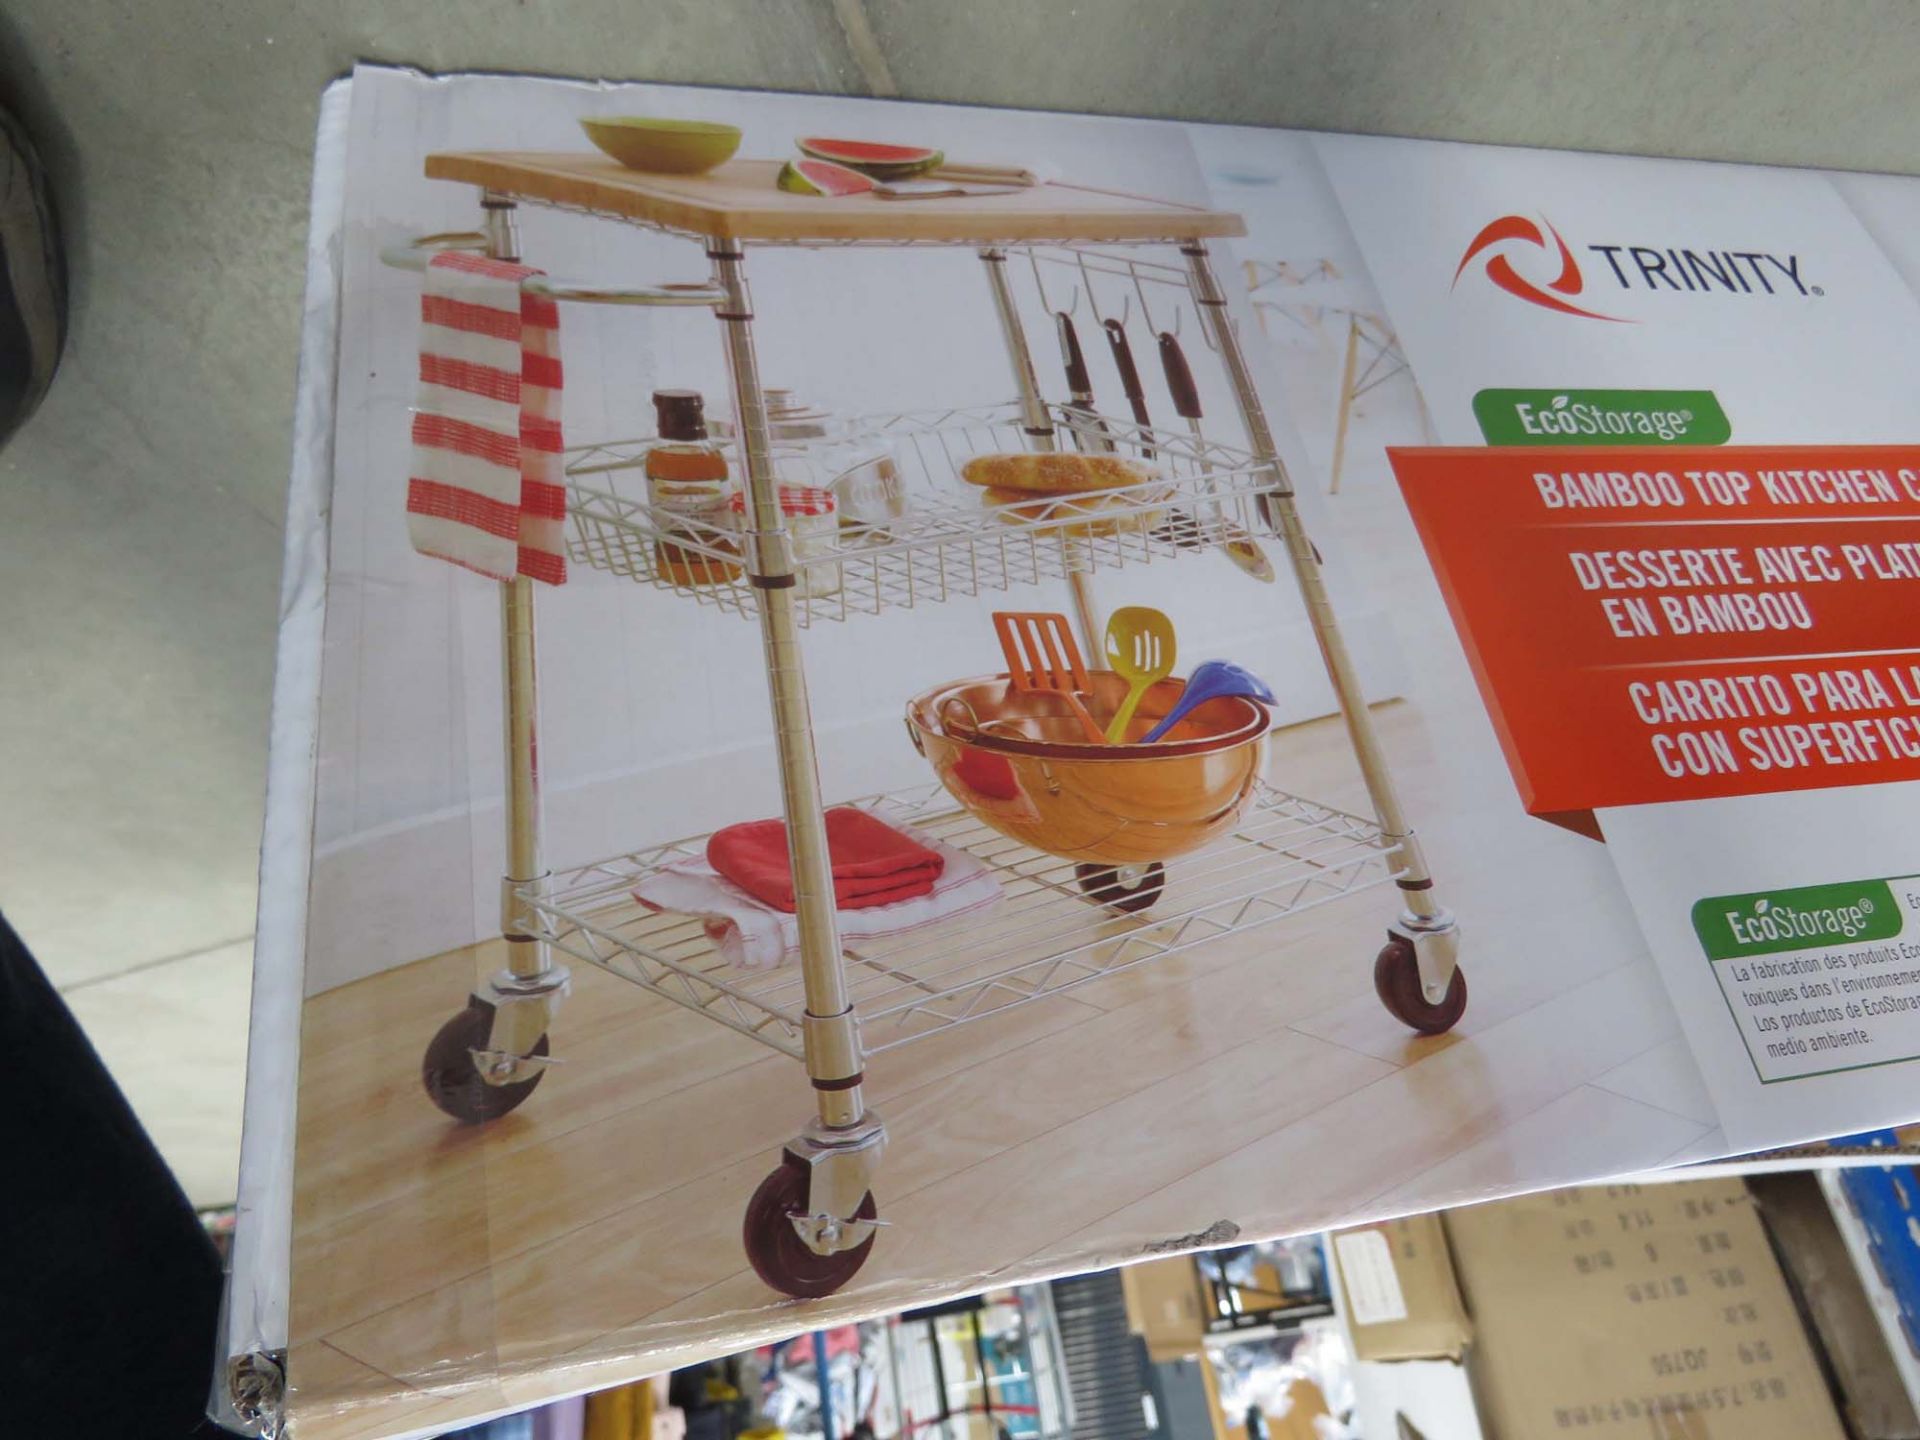 Trinity bamboo topped kitchen cart